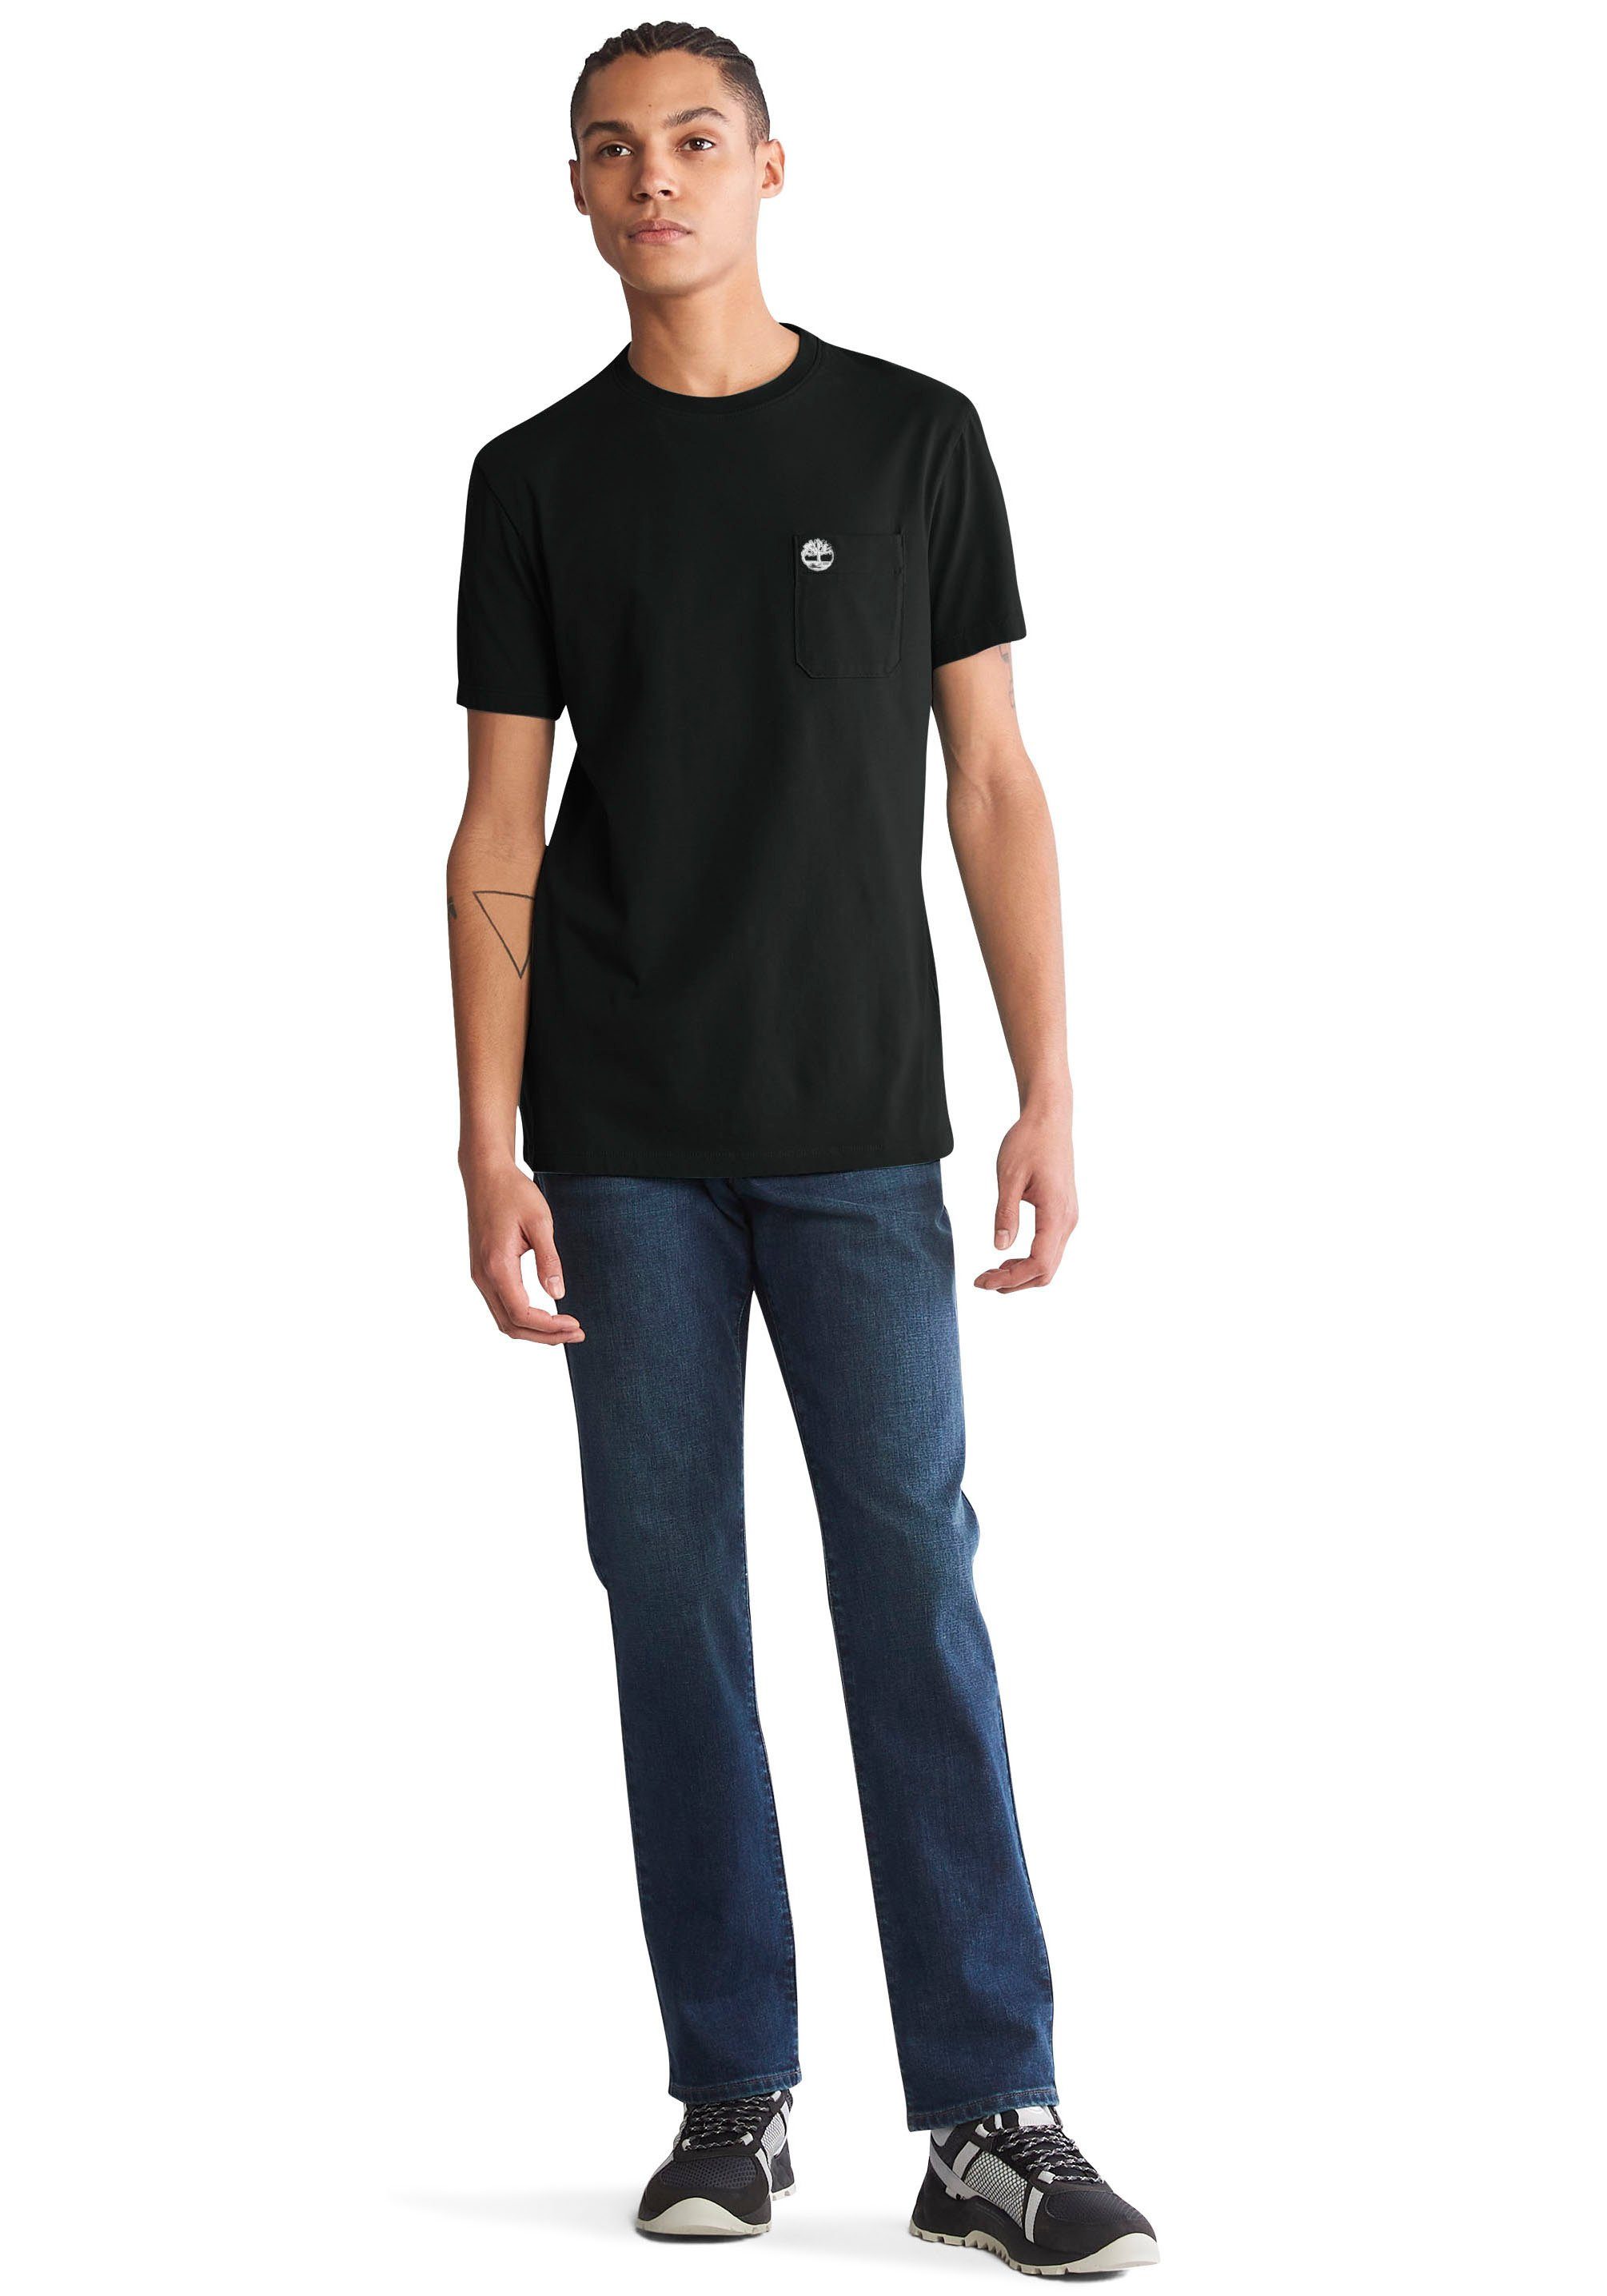 Timberland T-Shirt DUNSTAN RIVER POCKET black TEE